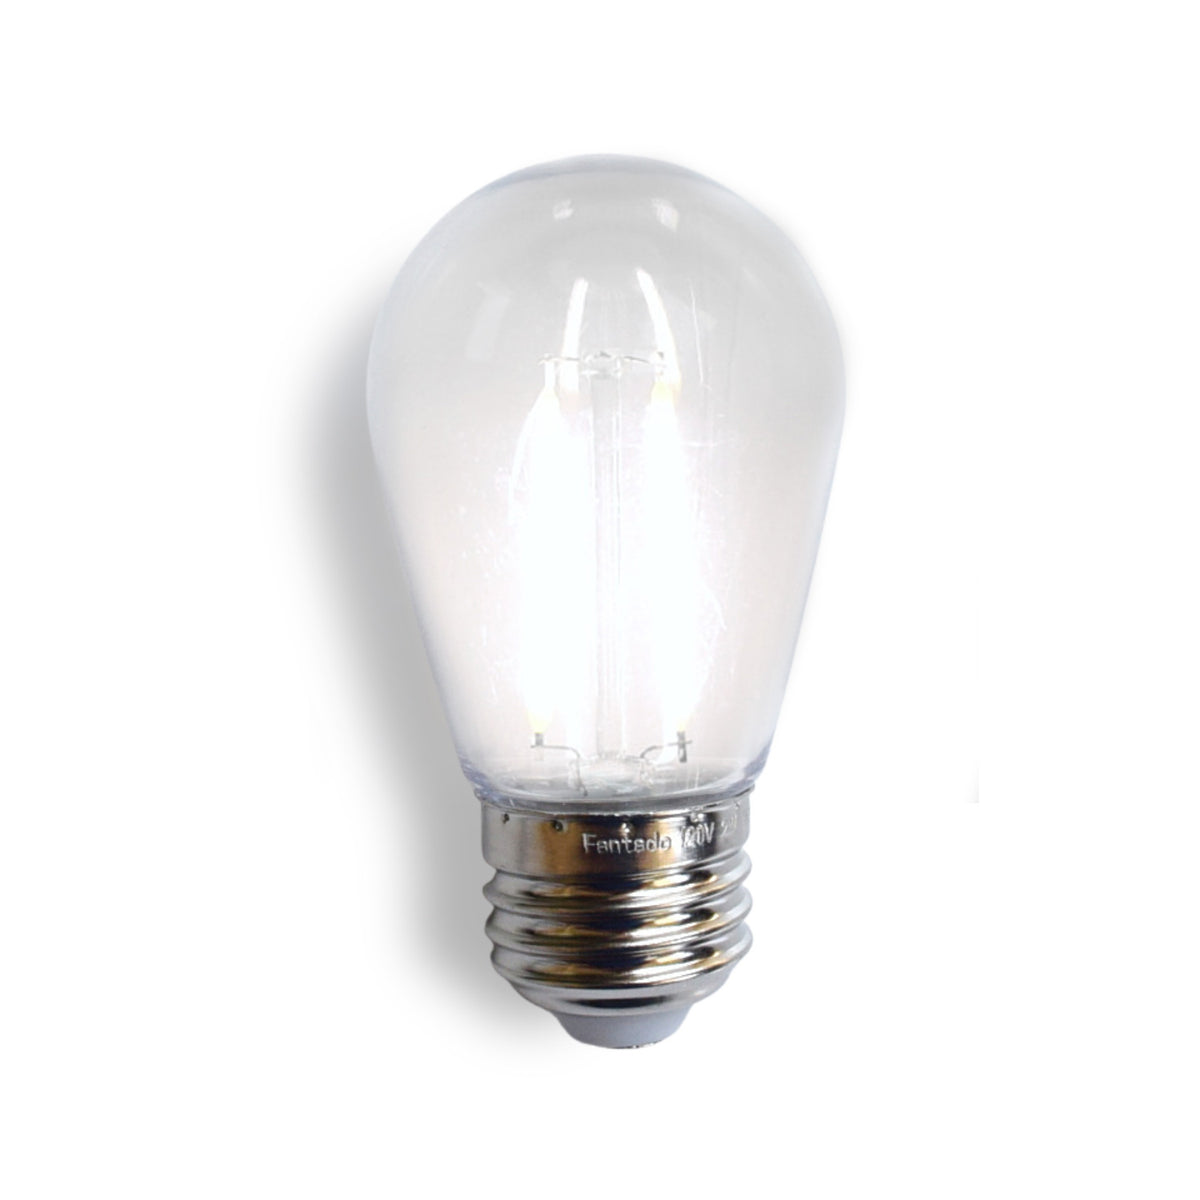 CORD + Shatterproof Bulb | White Weatherproof Outdoor Pendant Light Lamp Cord Combo Kit, S14 Cool White Bulb